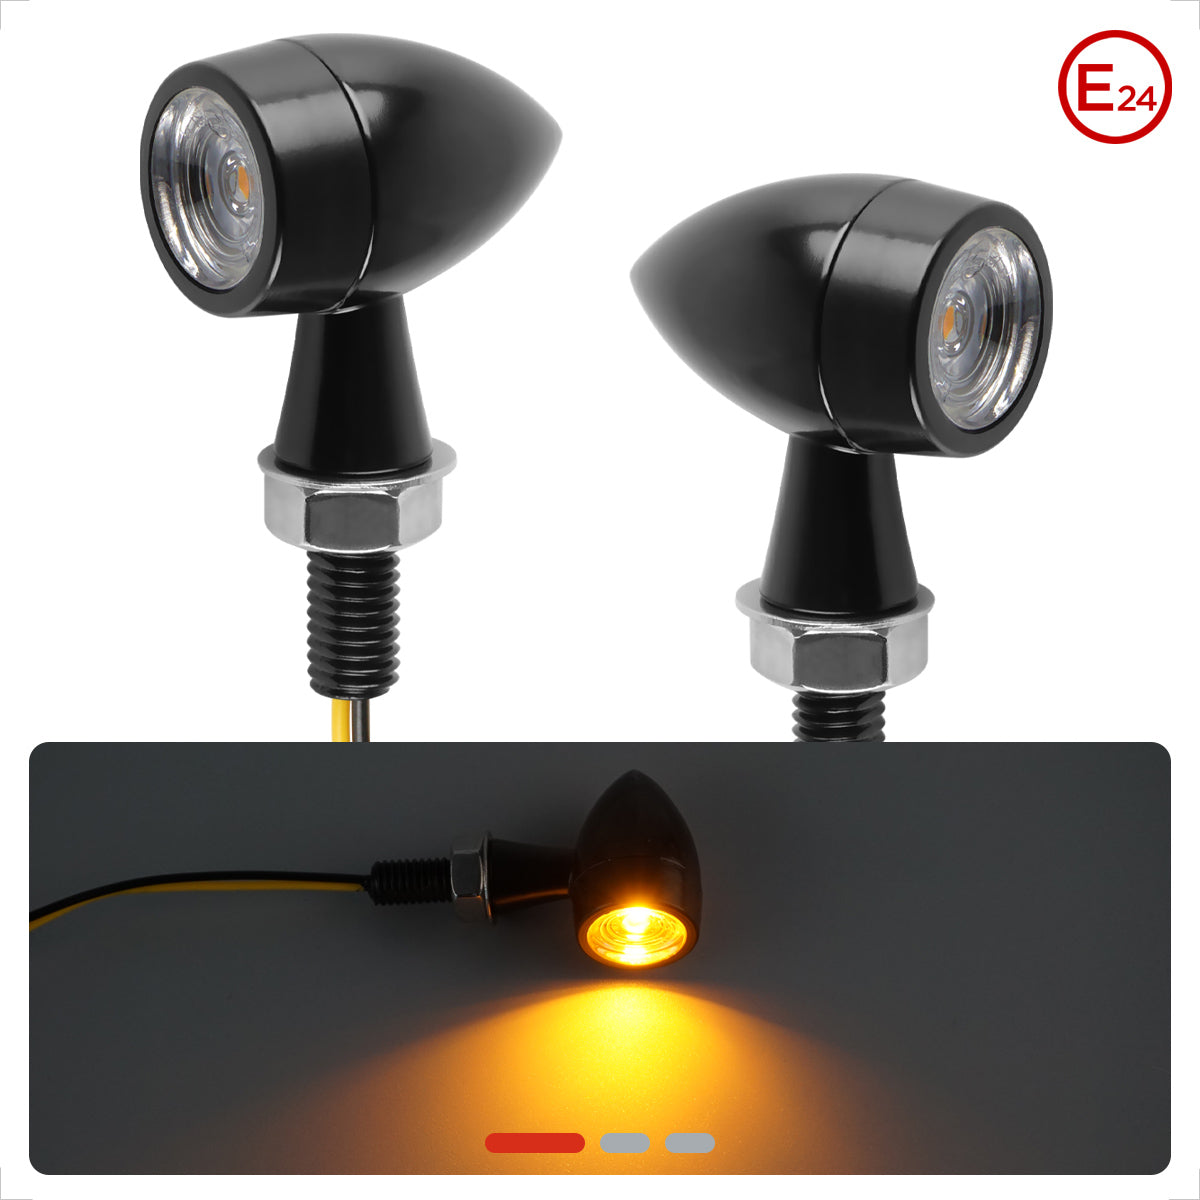 Evermotor Mini LED Blinker - E-geprüft, Wasserdicht, und Stilvoll!